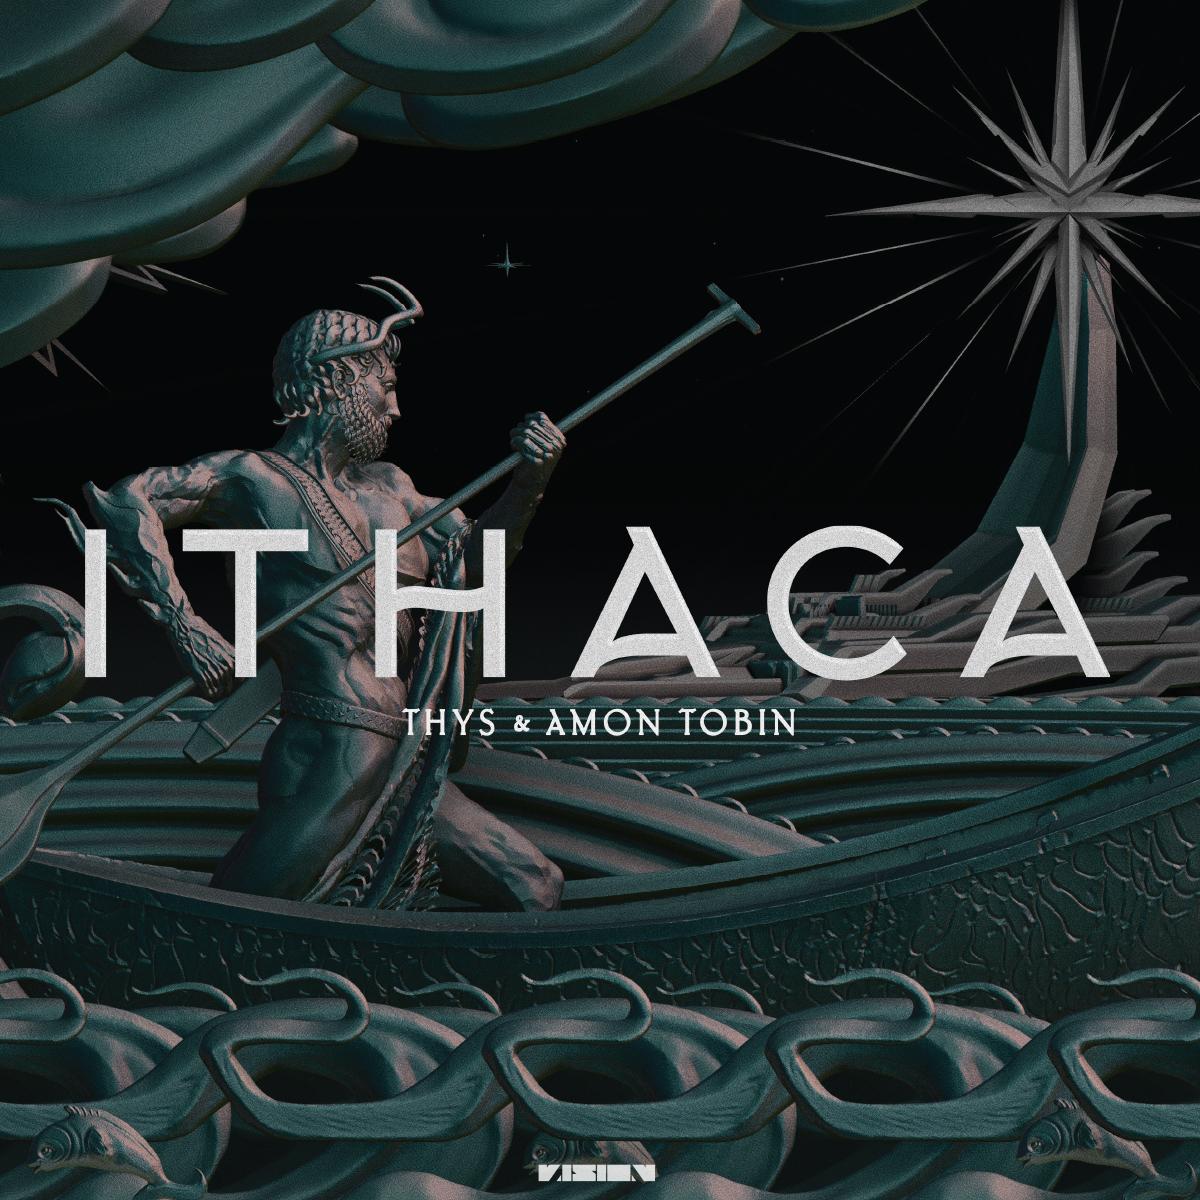 Thys & Amon Tobin/ITHACA EP 12"